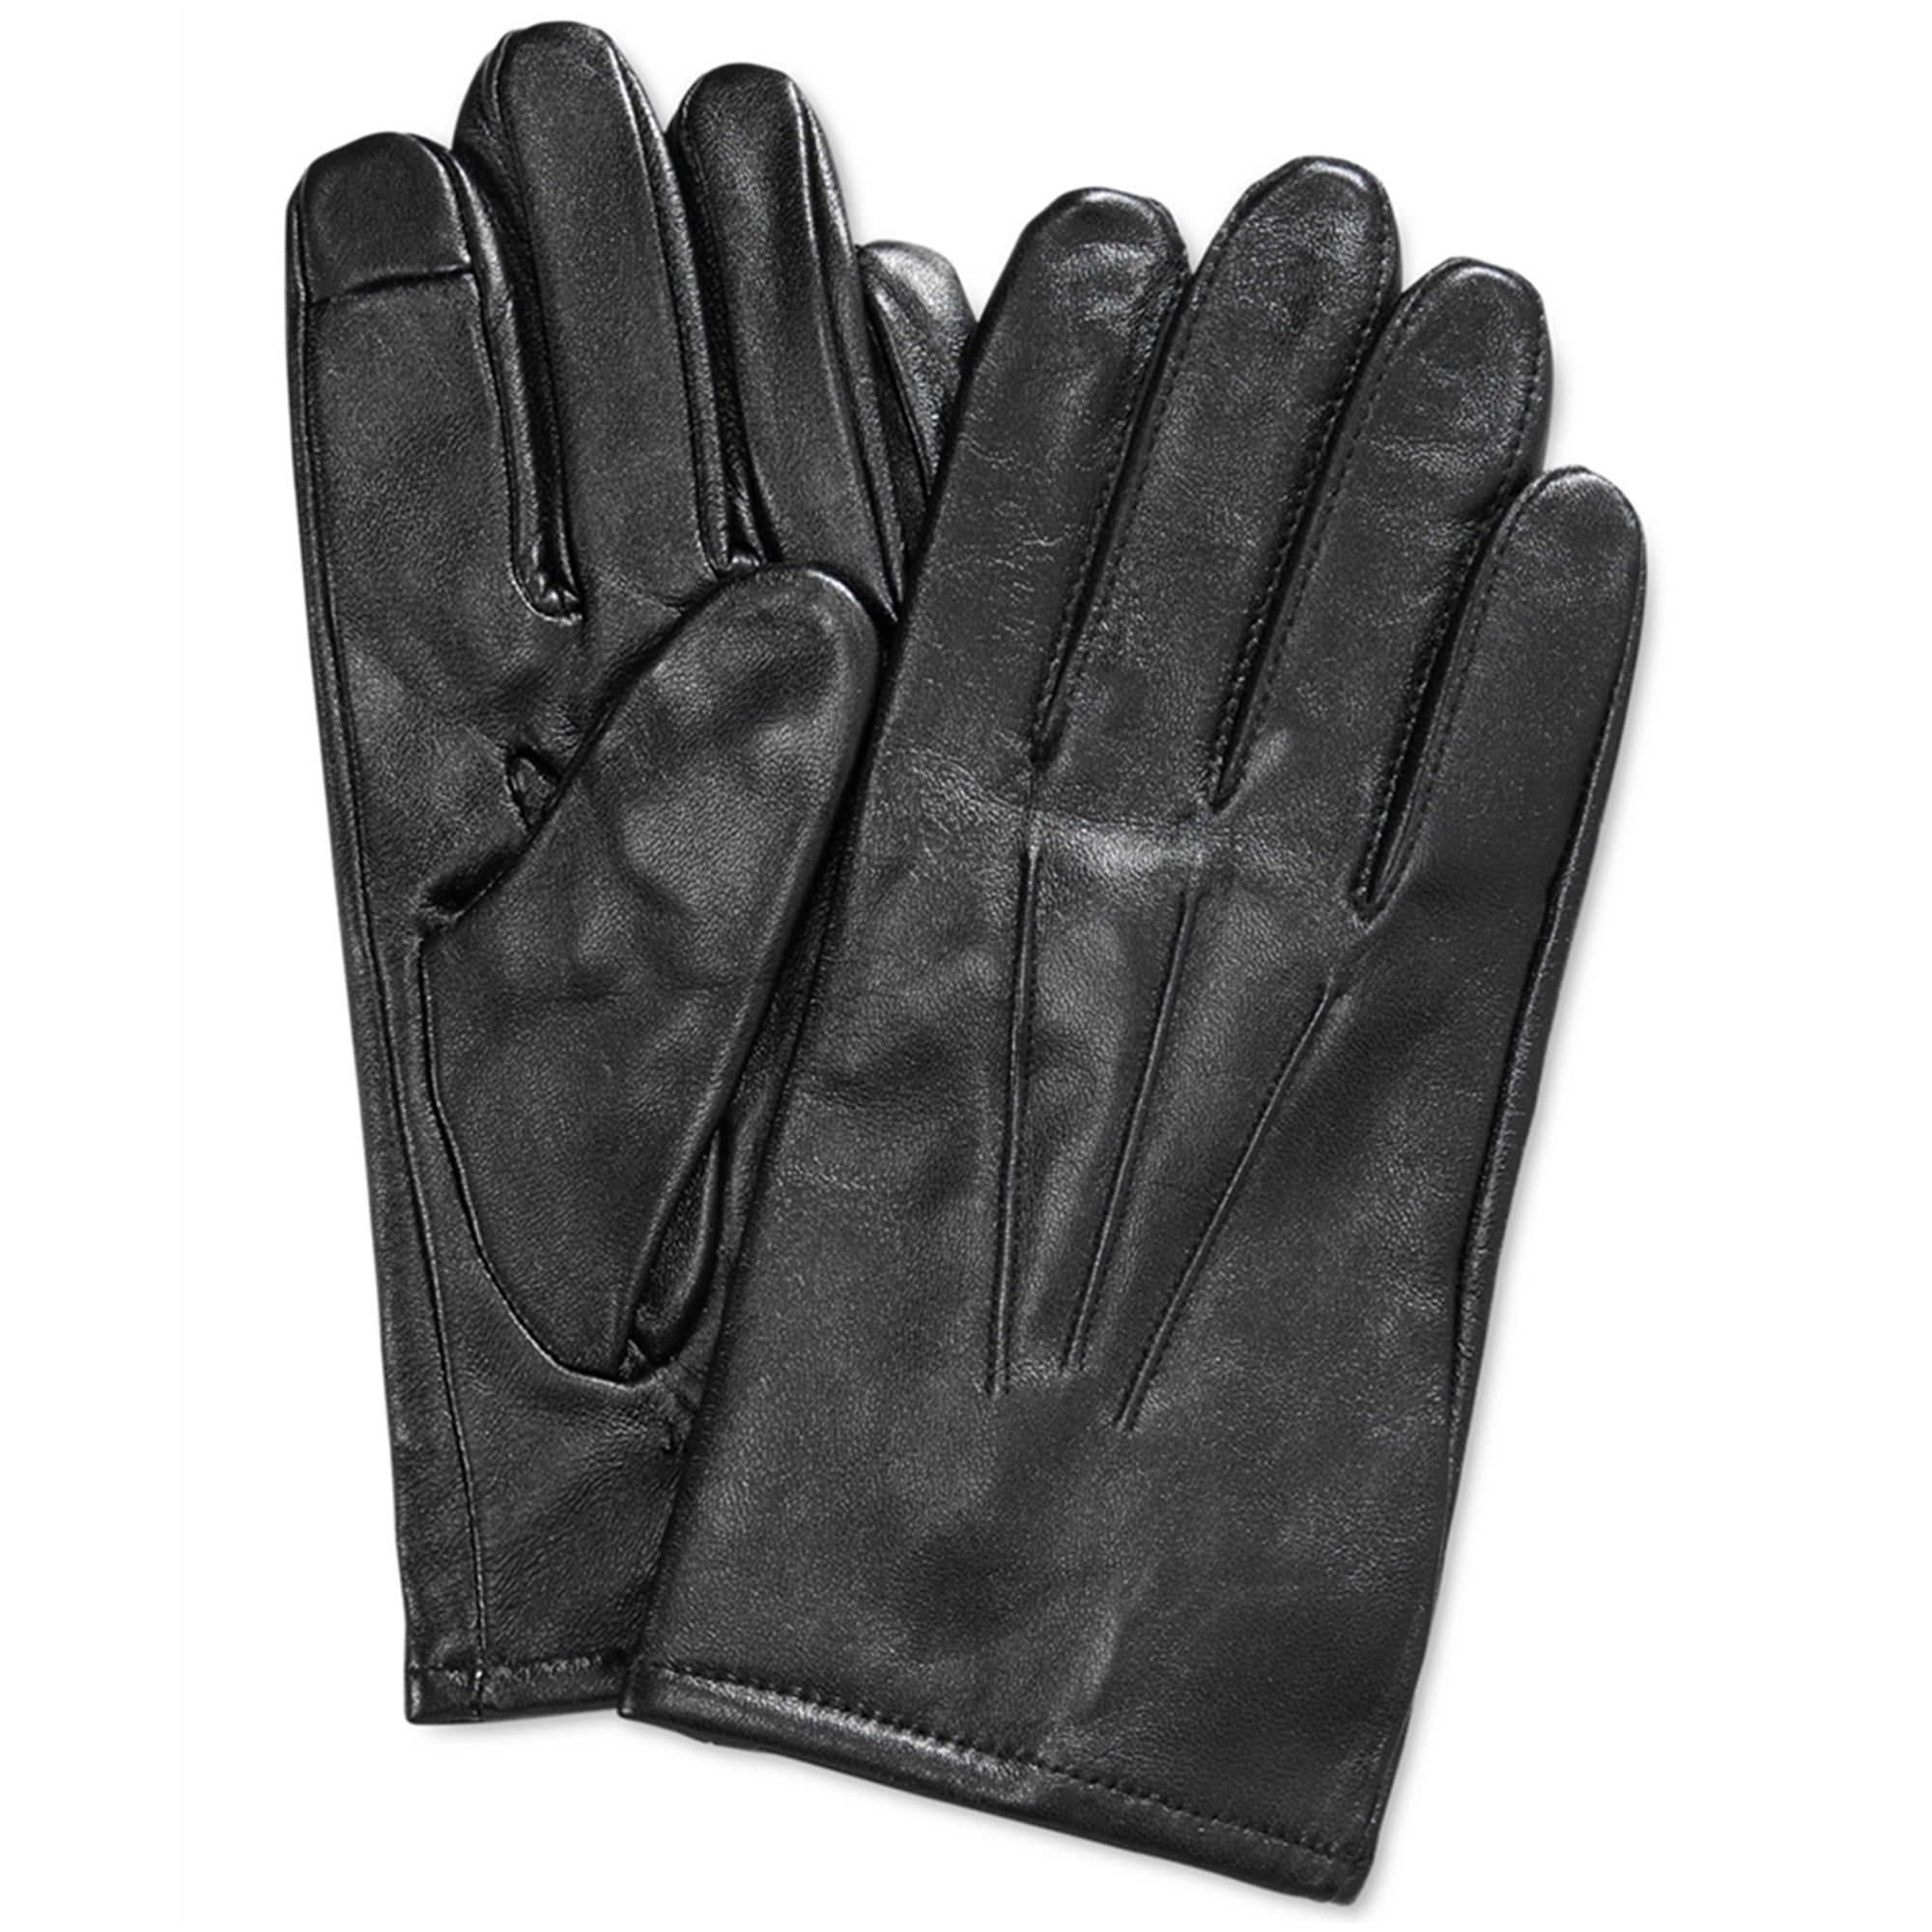 Club Room - Club Room Mens Cashmere Lined Leather Gloves, Black, Medium ...